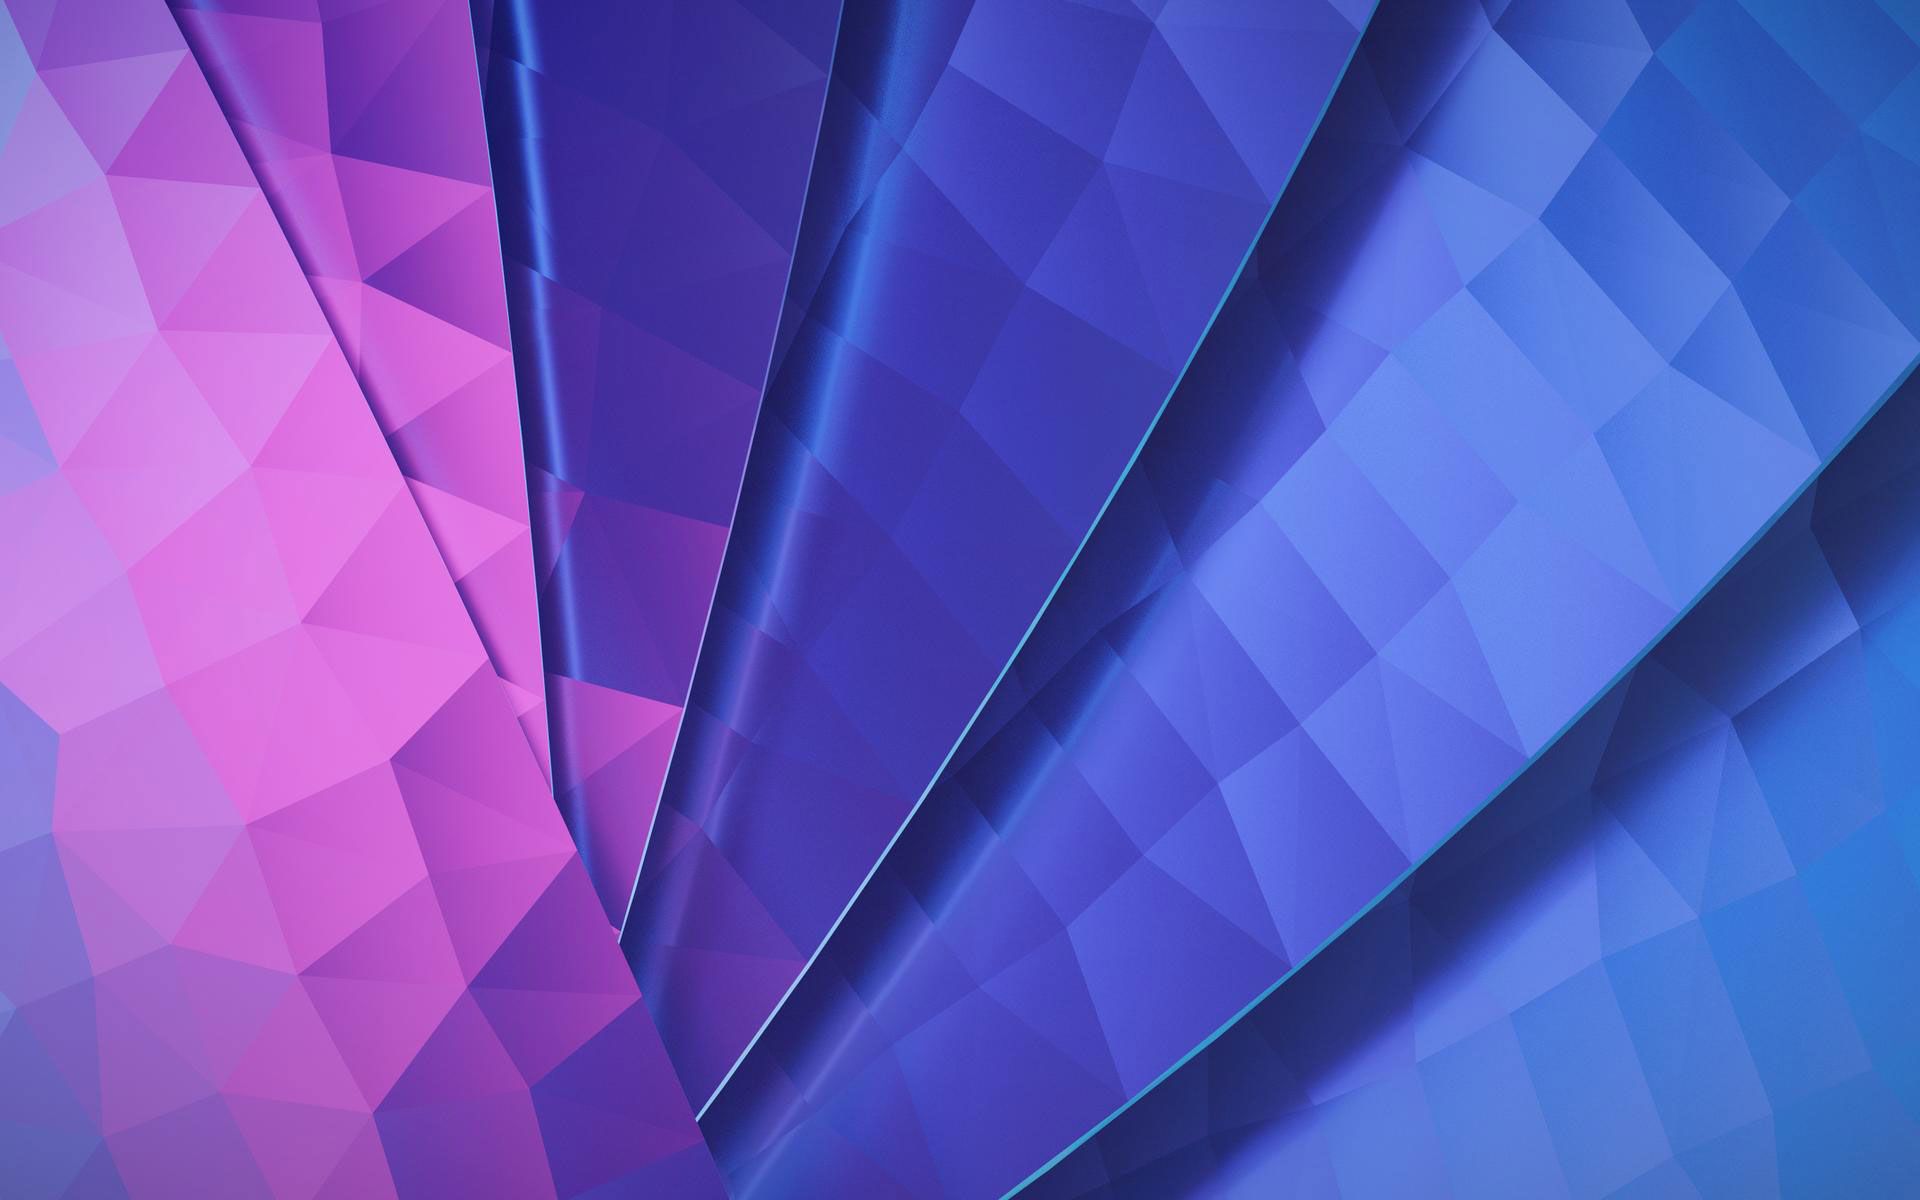 KDE's Latest Plasma Wallpaper is Here And It's Shiny! Ubuntu!